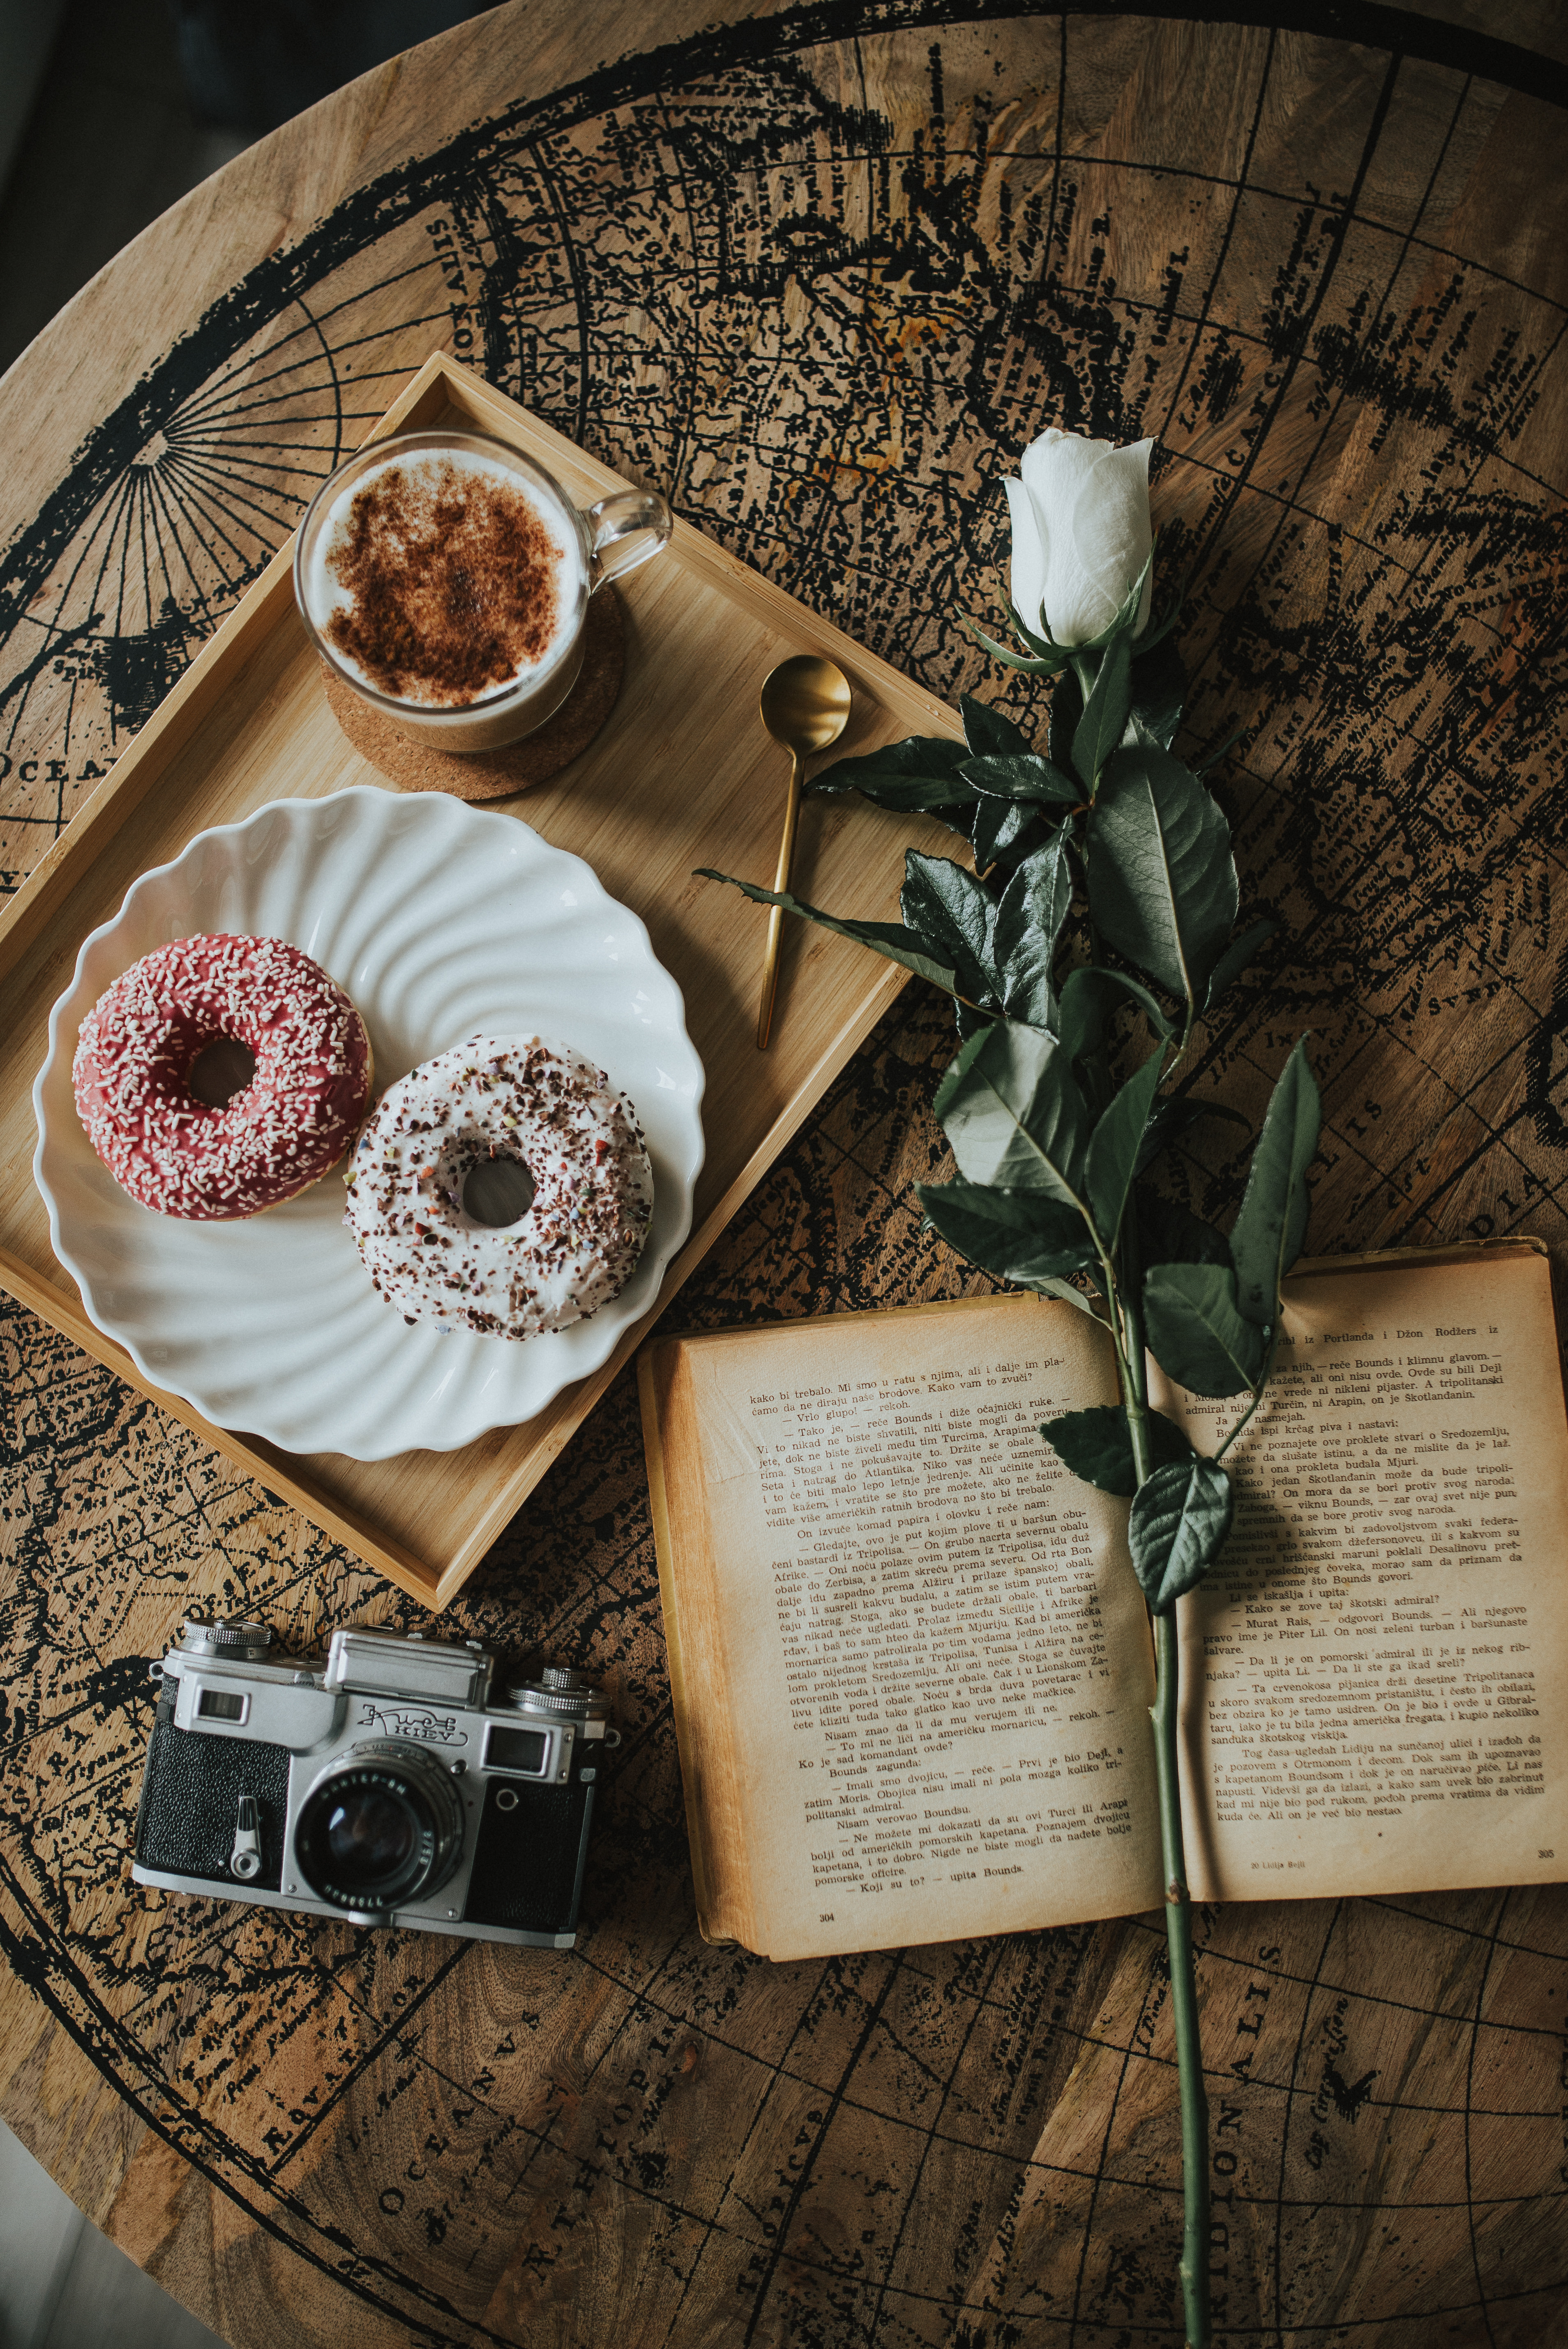 donuts, cup, coffee, flower, miscellanea, miscellaneous, book, camera